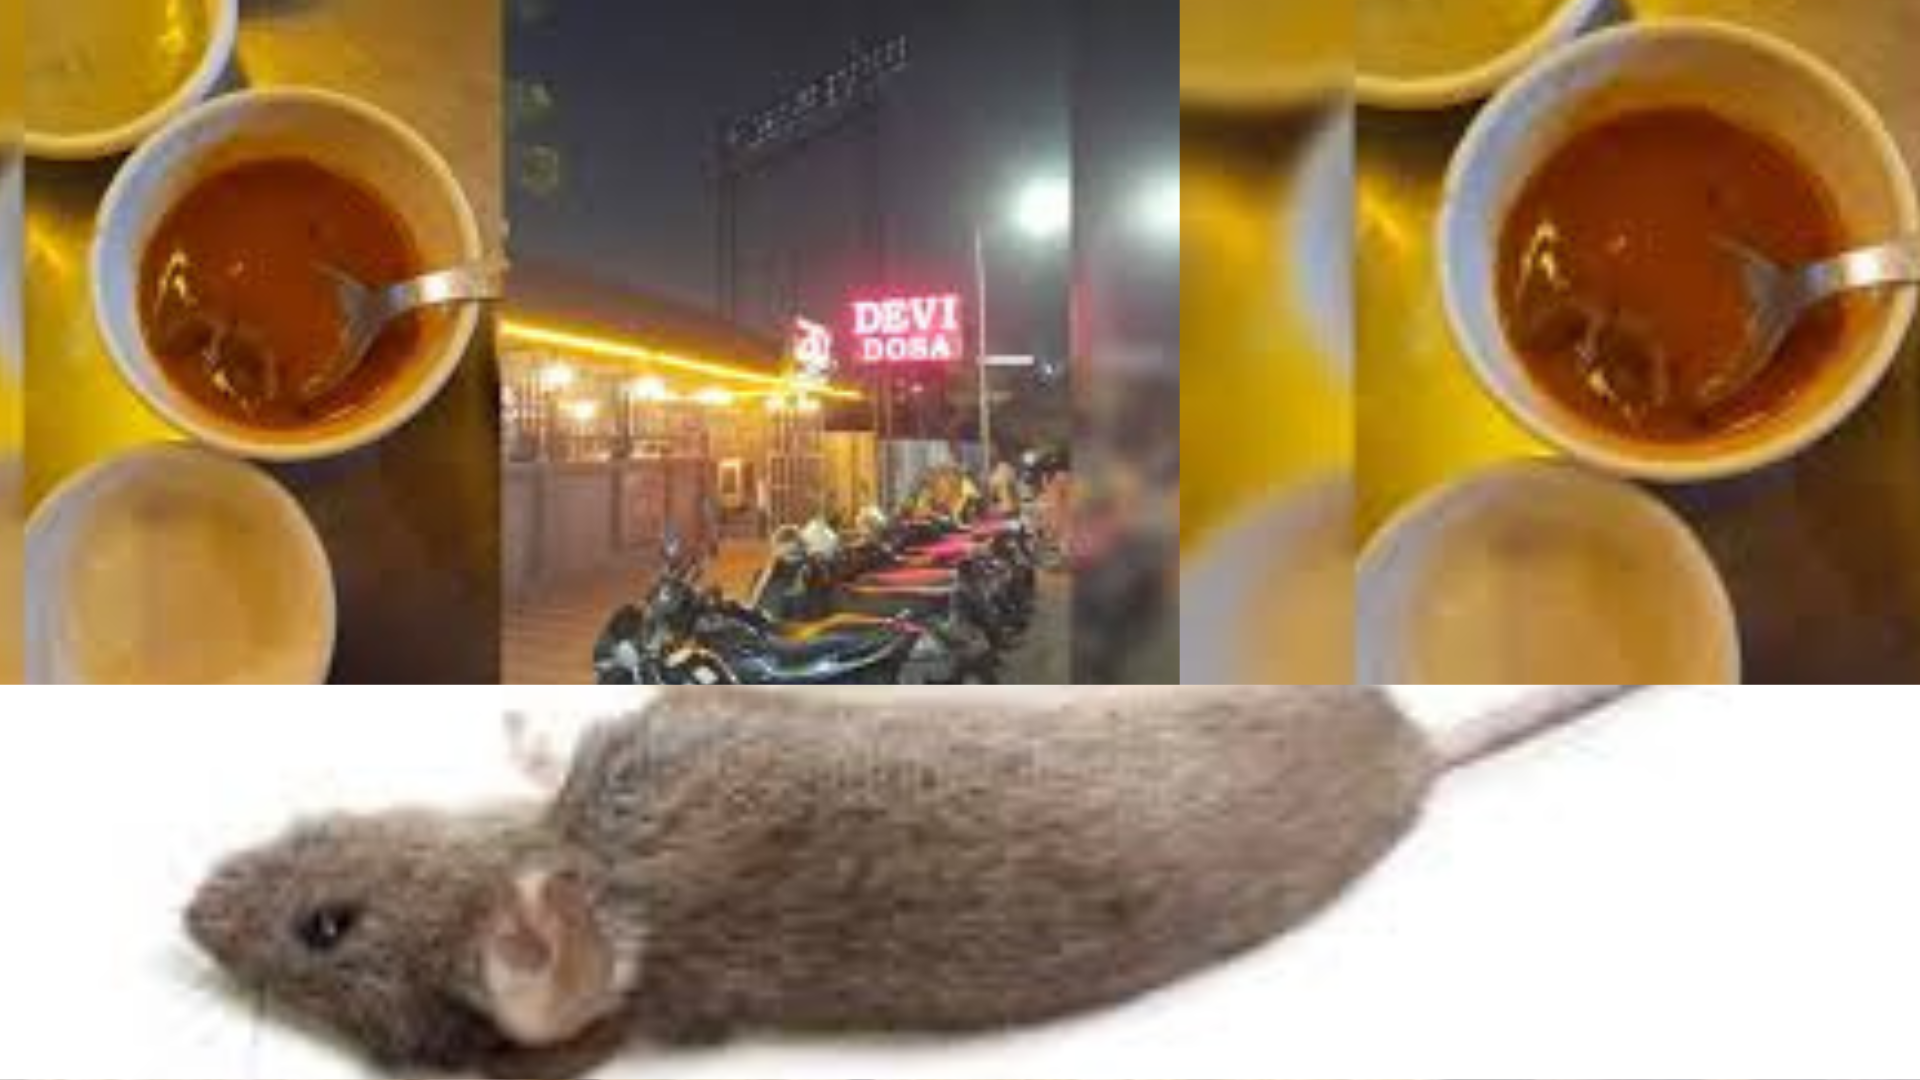 Dead Rat Found in Sambar at Ahmedabad Restaurant, Watch Viral Video